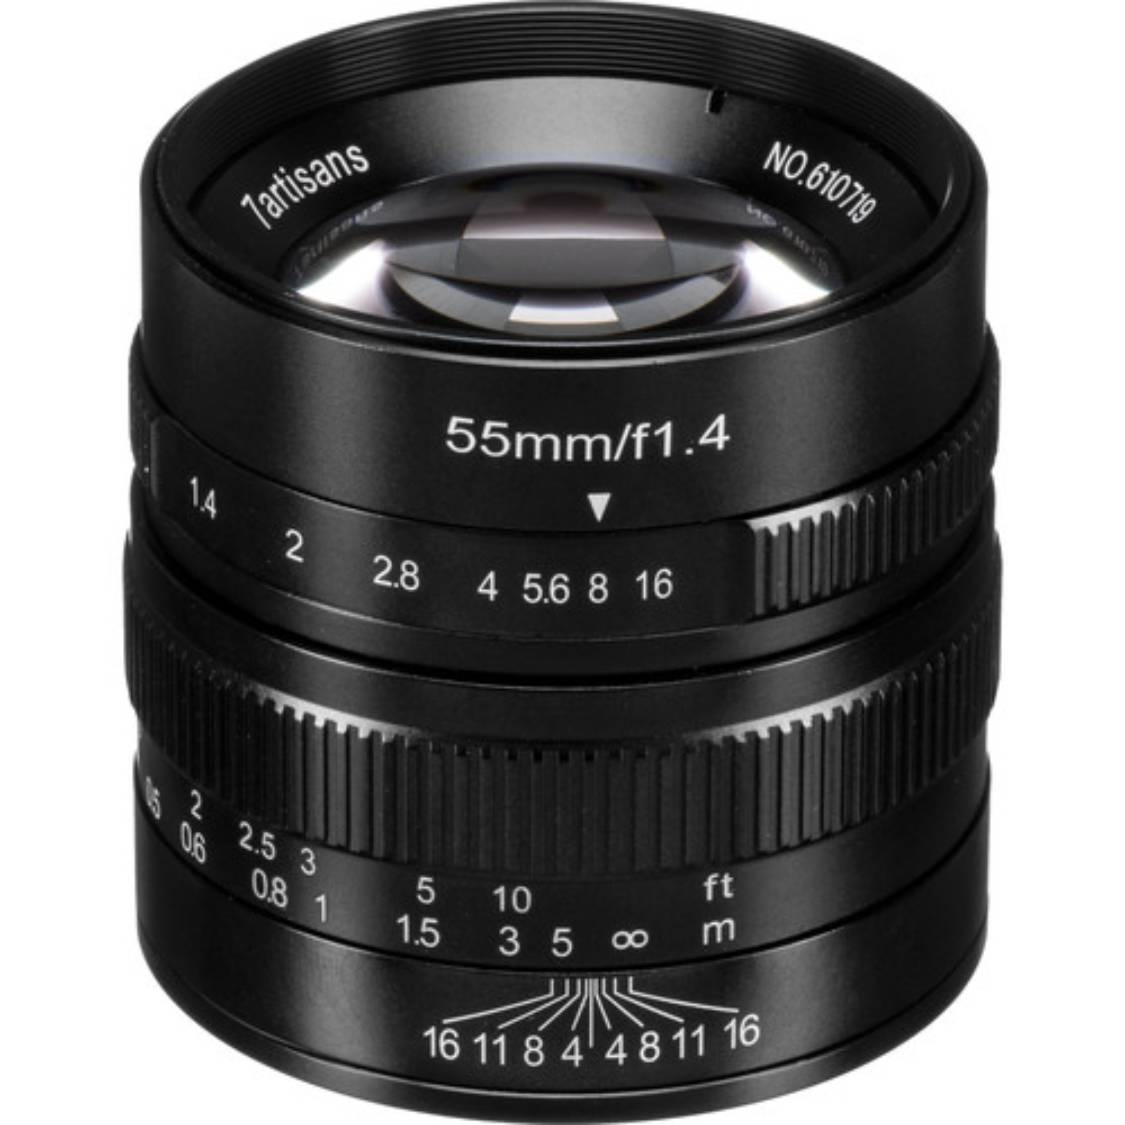 7artisans 55mm f/1.4 II Lens for Fuji X